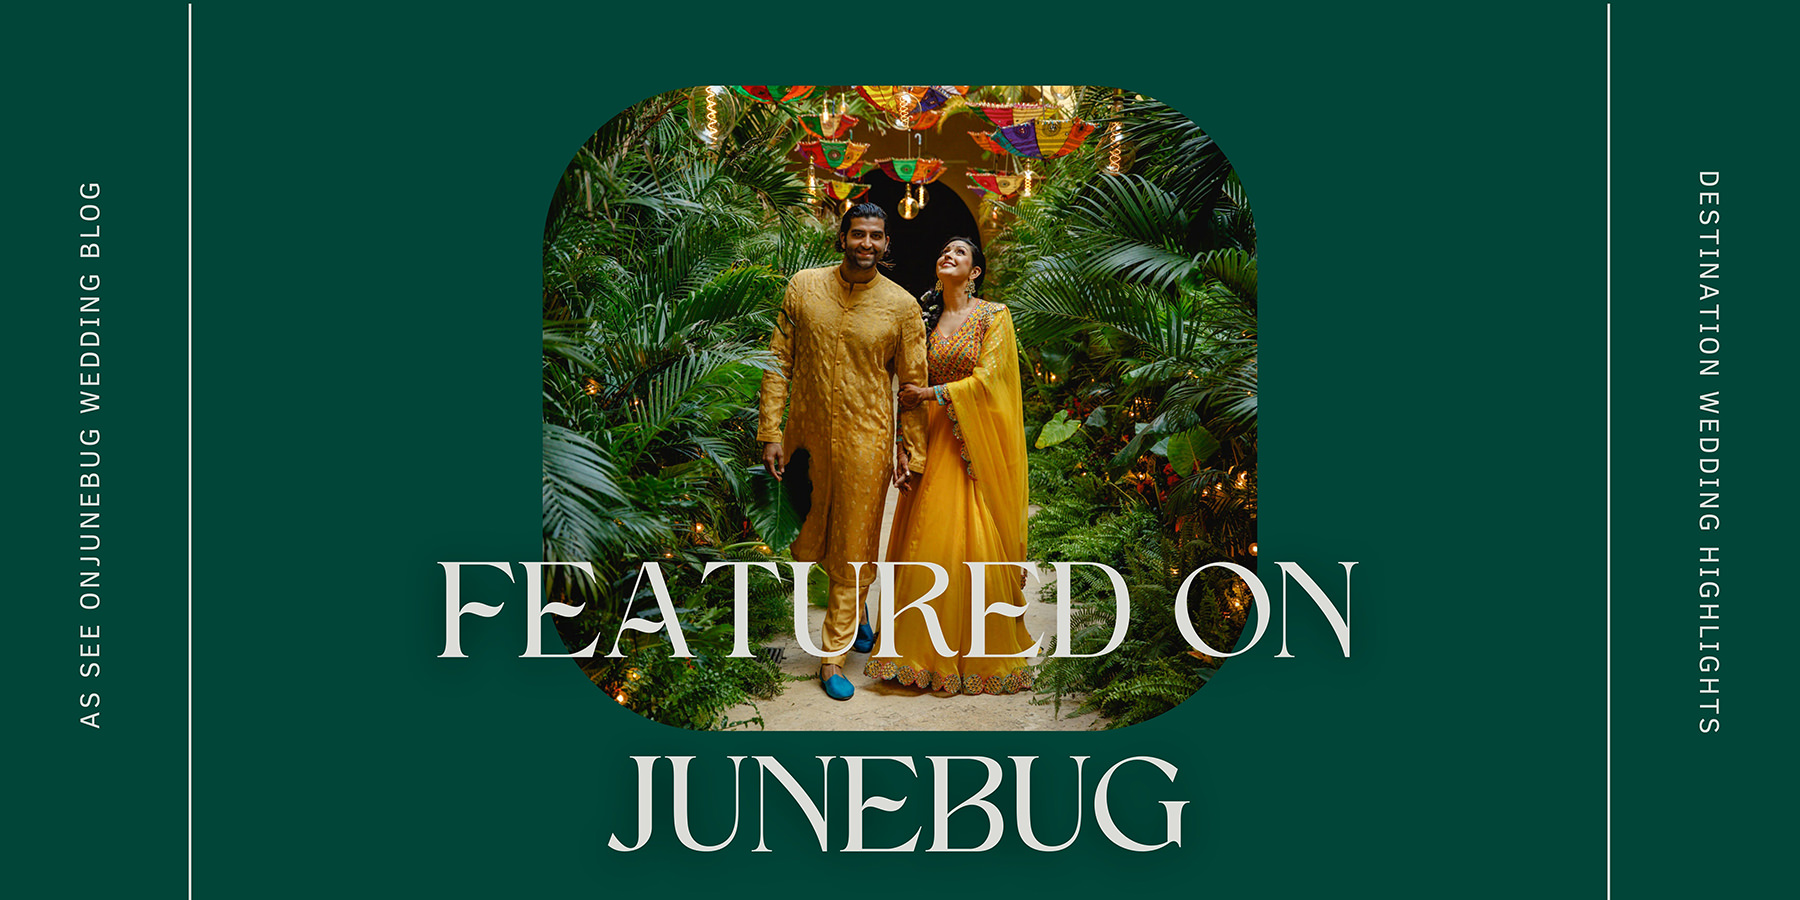 indian wedding featured on Junebug